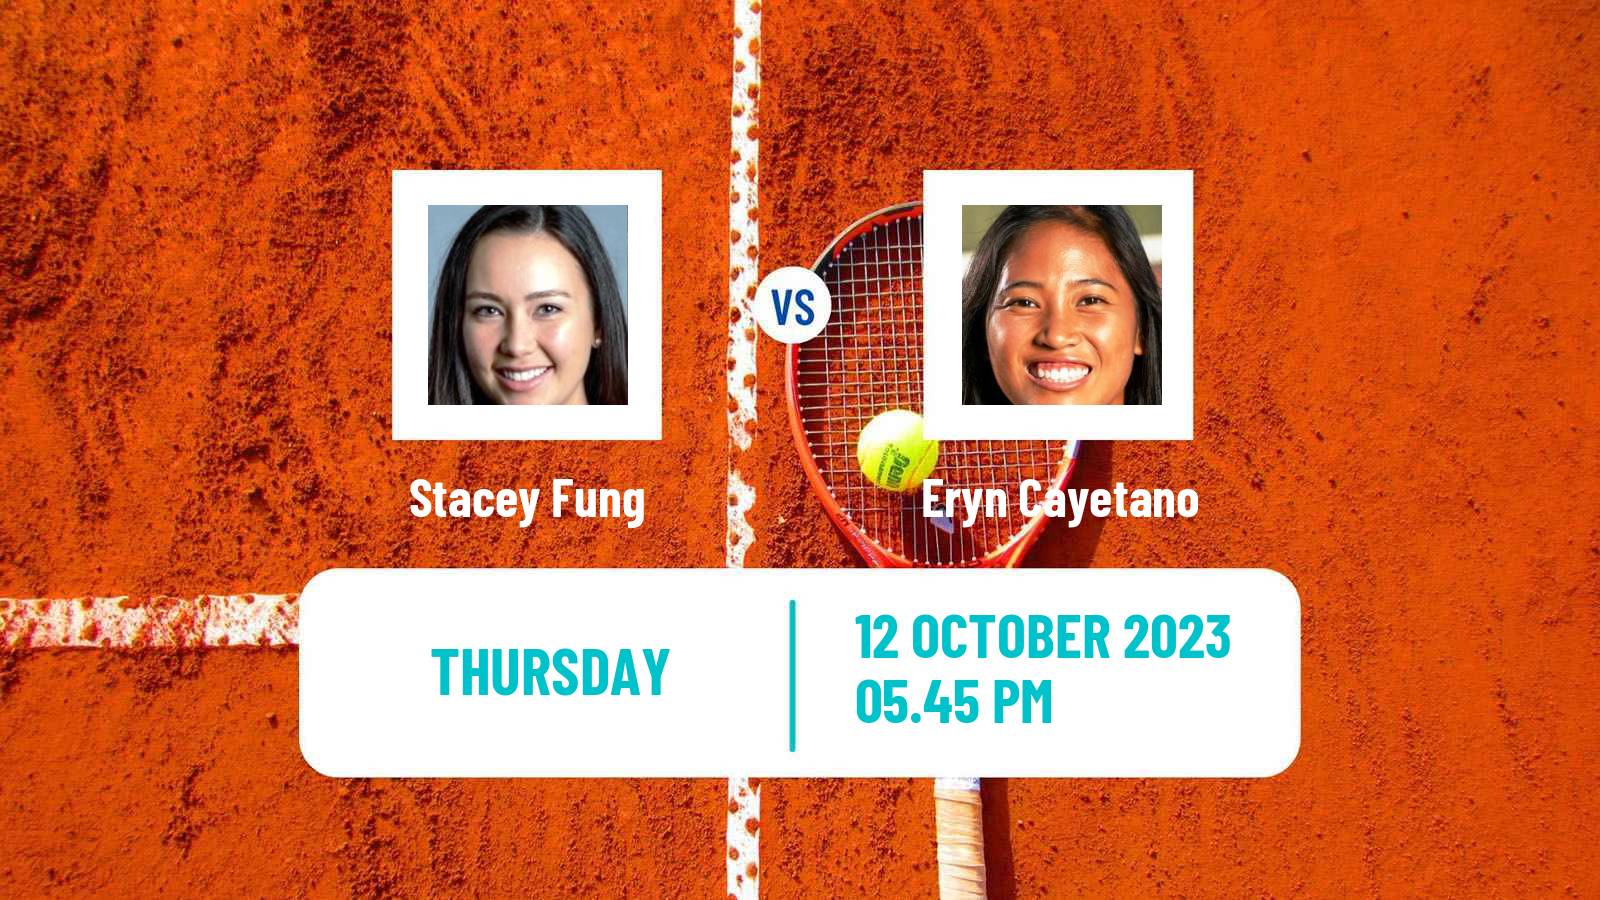 Tennis ITF W60 Rancho Santa Fe Ca Women Stacey Fung - Eryn Cayetano